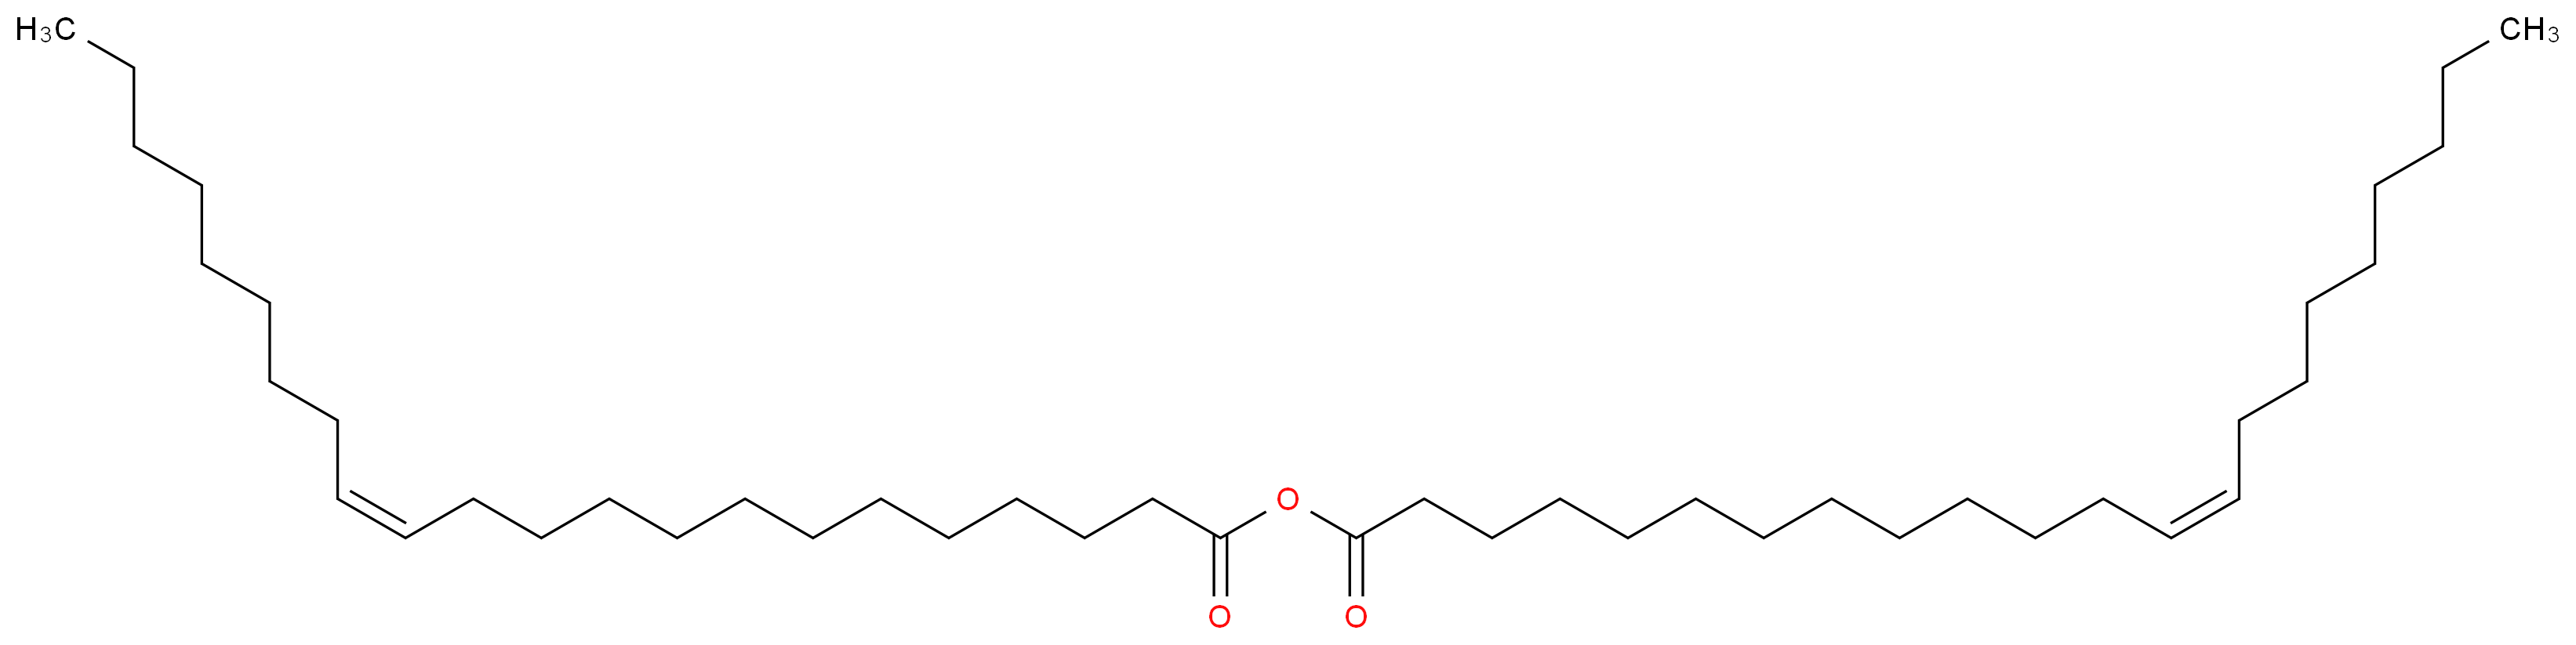 CAS_103213-60-1 molecular structure